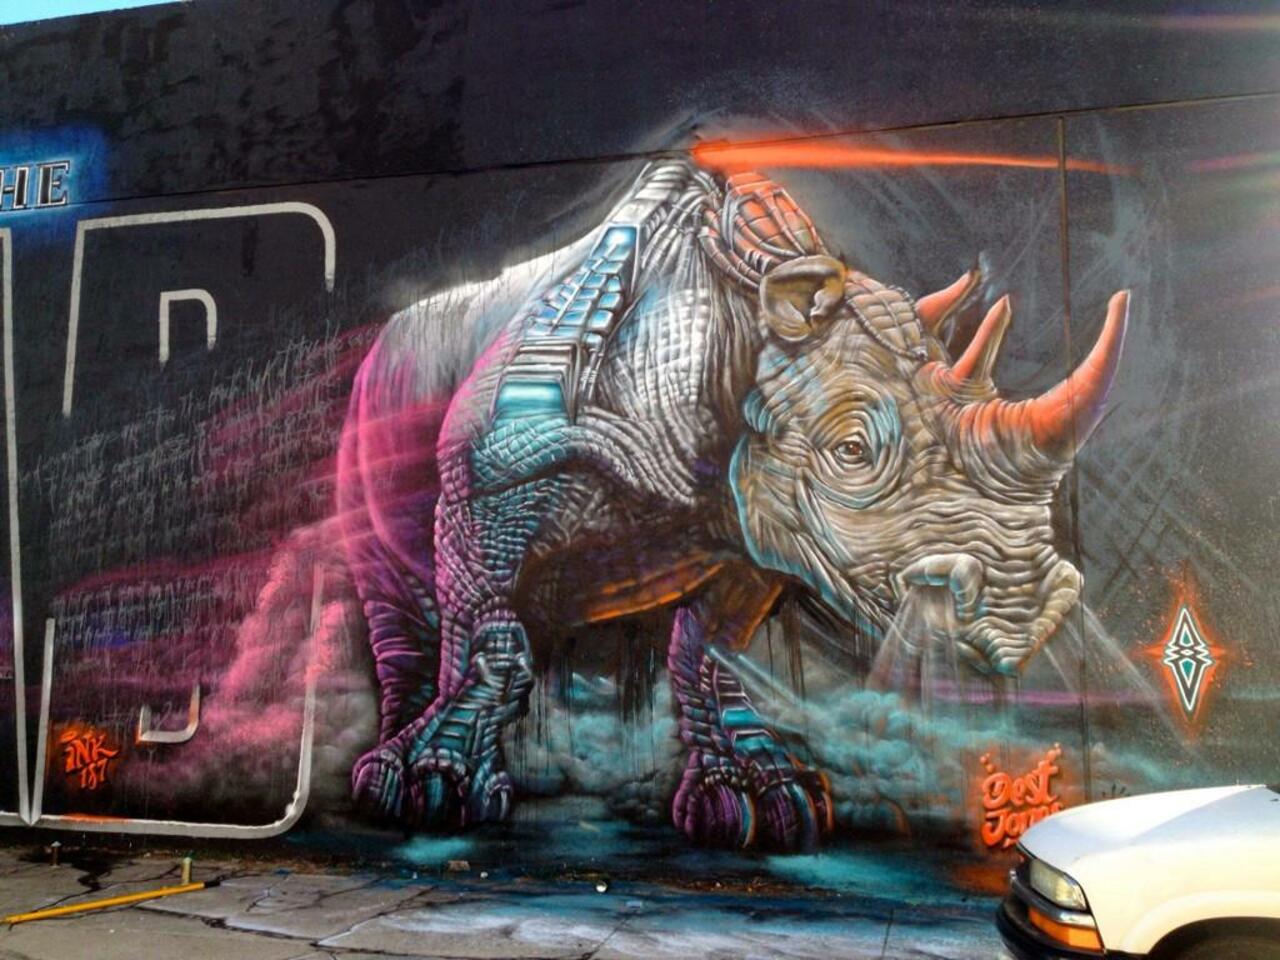 RT @semprecontro: RT @GoogleStreetArt: Incredible Street Art by artist Dest 

#art #mural #graffiti #streetart http://t.co/zniwZOHk5W